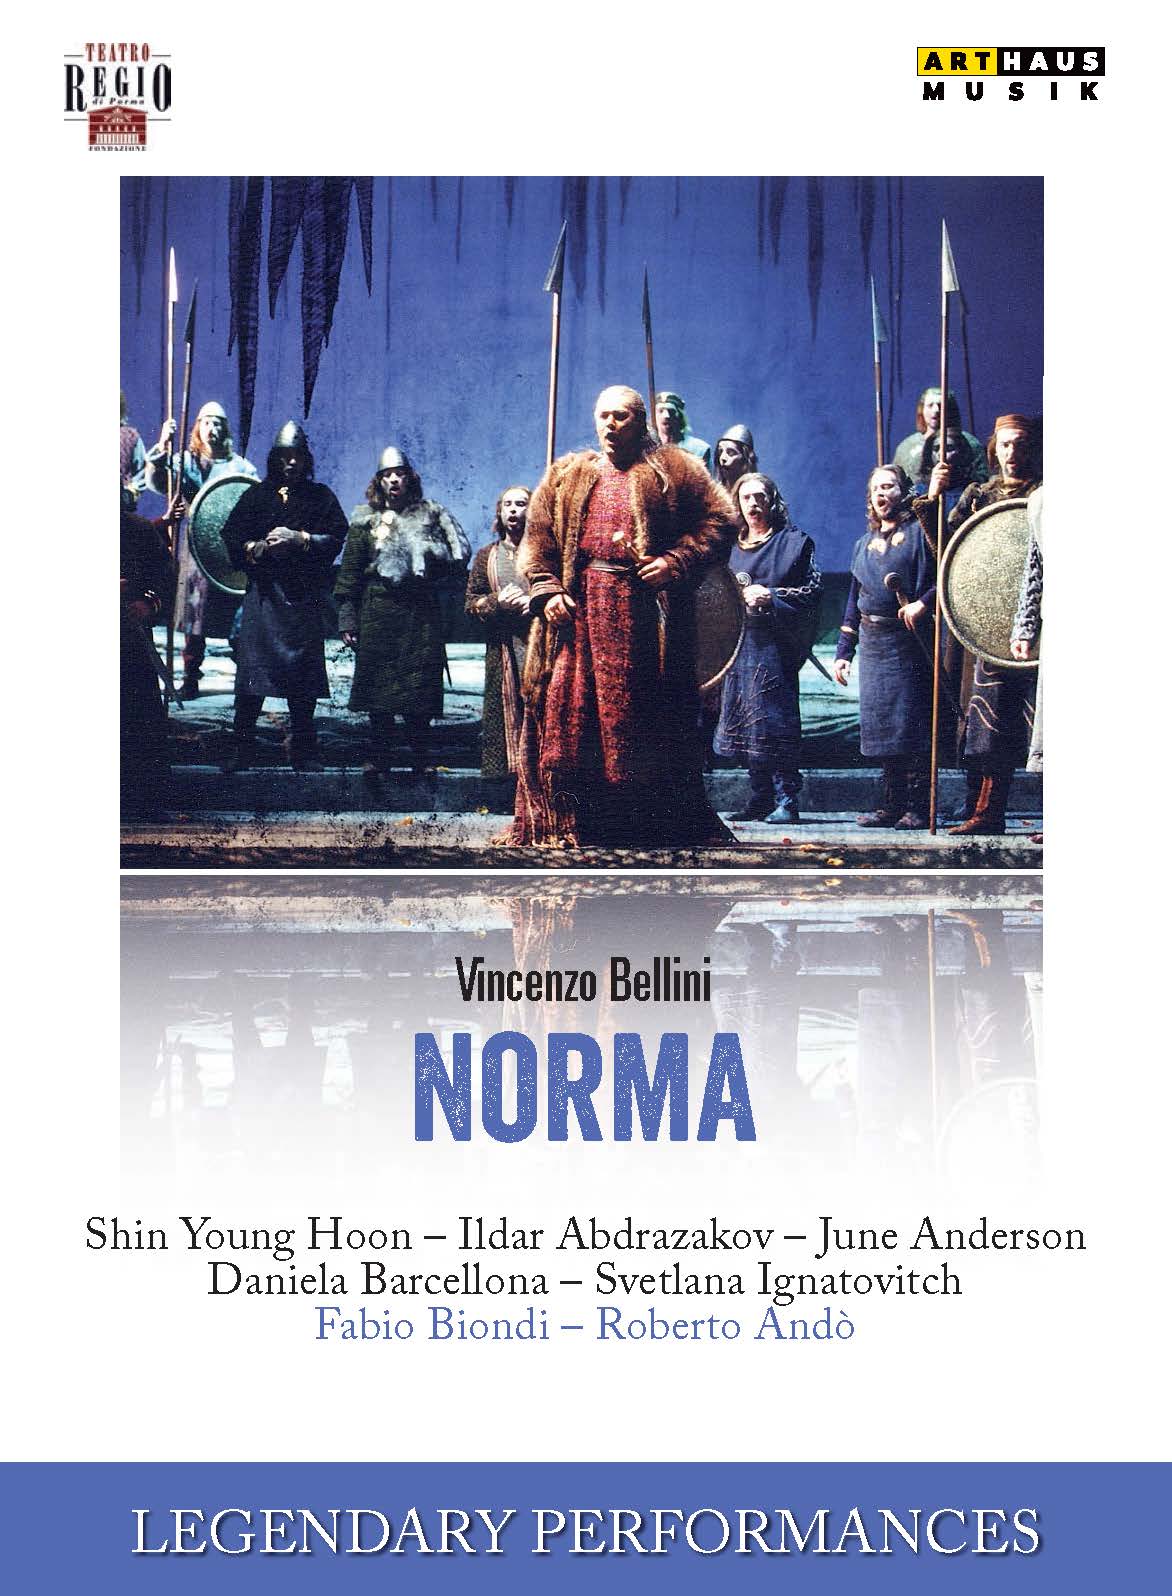 Vincenco Bellini : Norma - Legendary Performances DVD - Arthaus Musik